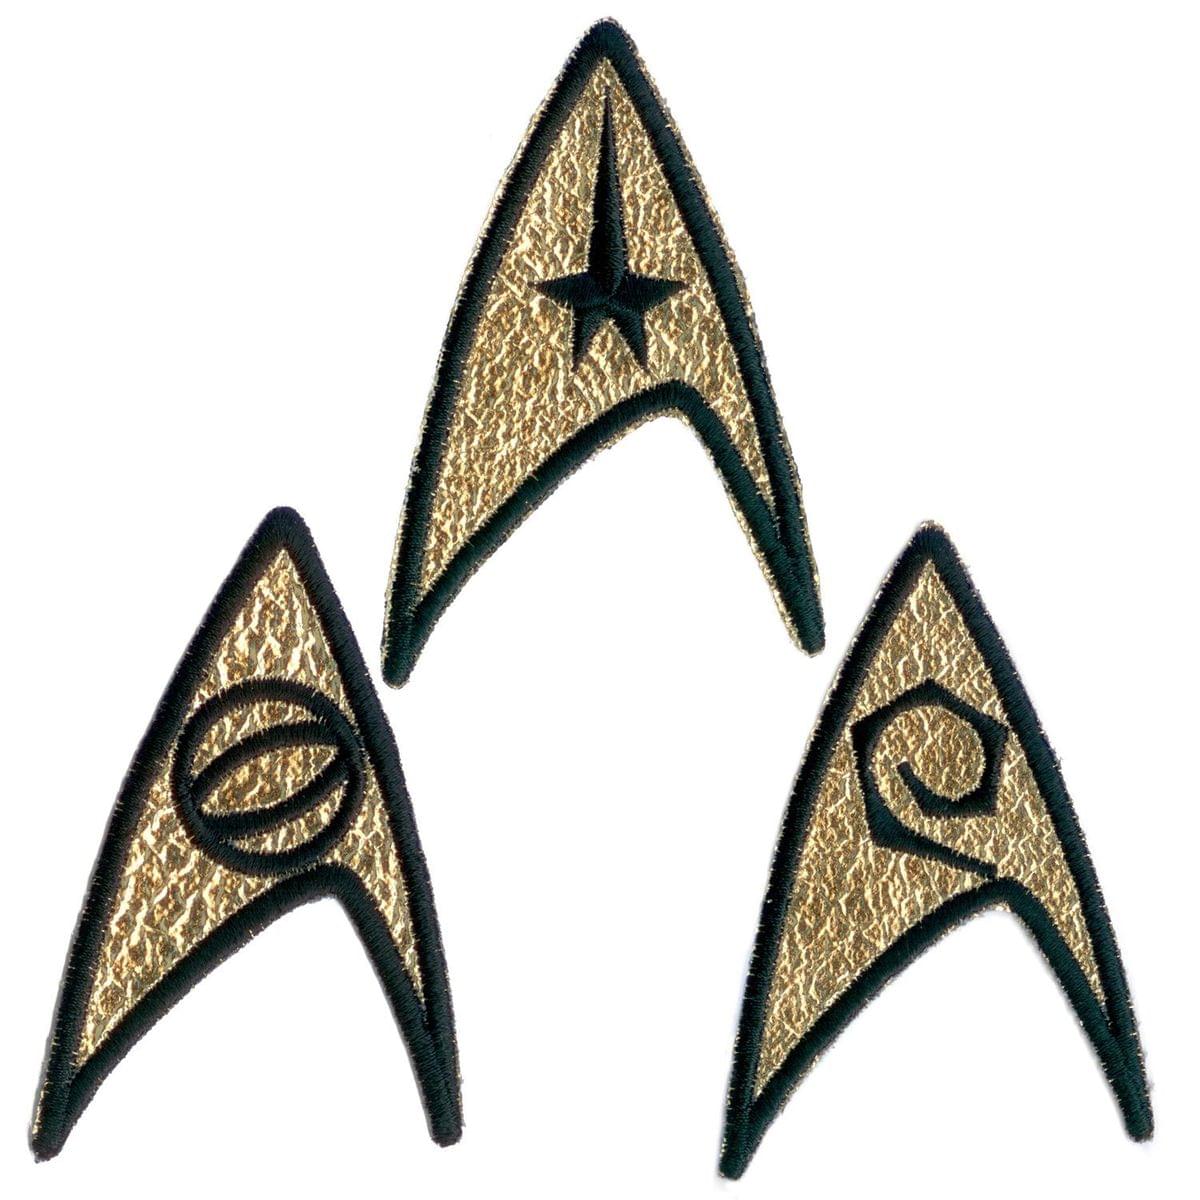 Star Trek The Original Series Complete Uss Enterprise Patch Collection